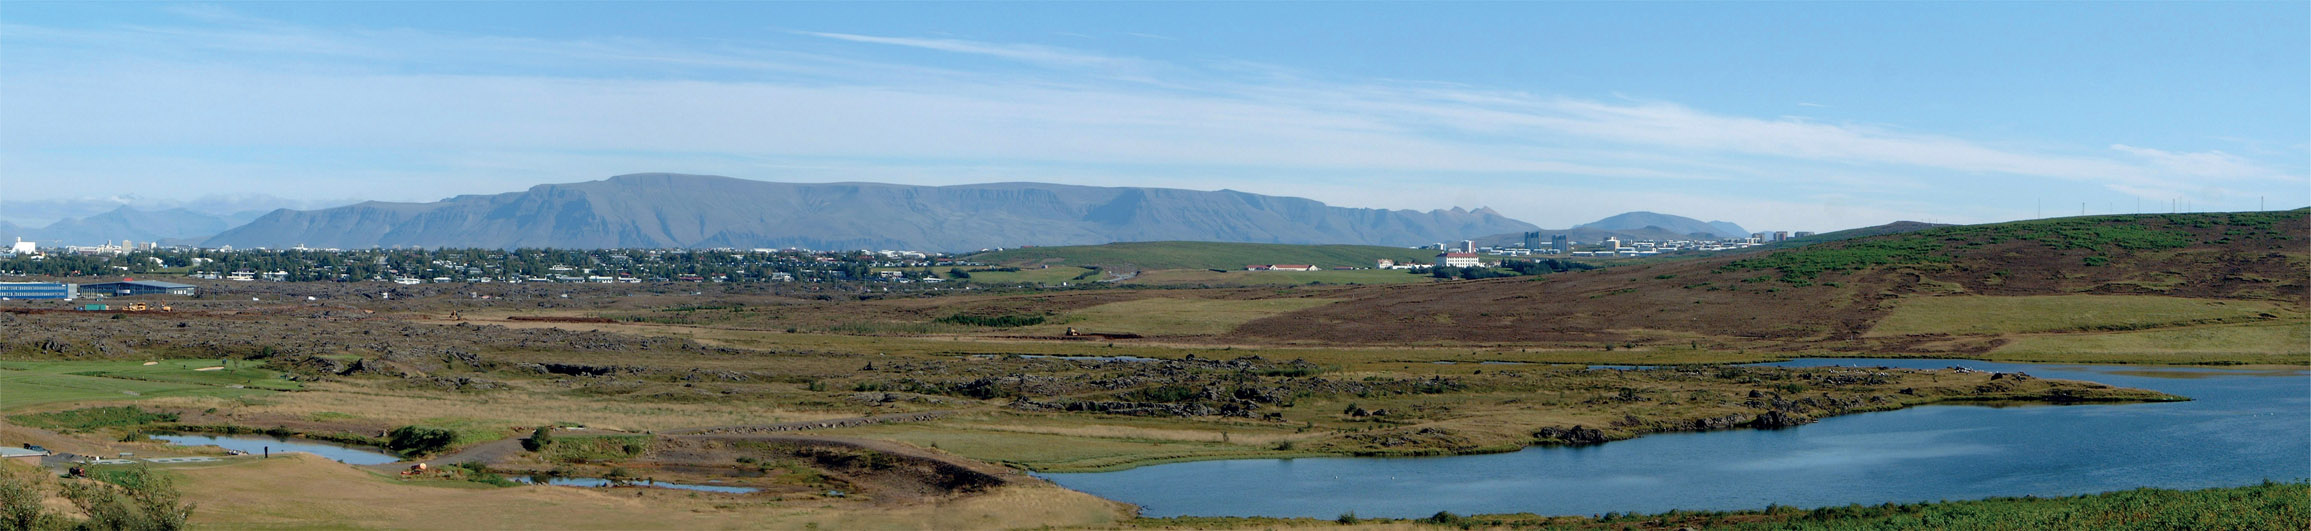 Figure 5.7.1: View of Urridaholt and Urridavatn Lake